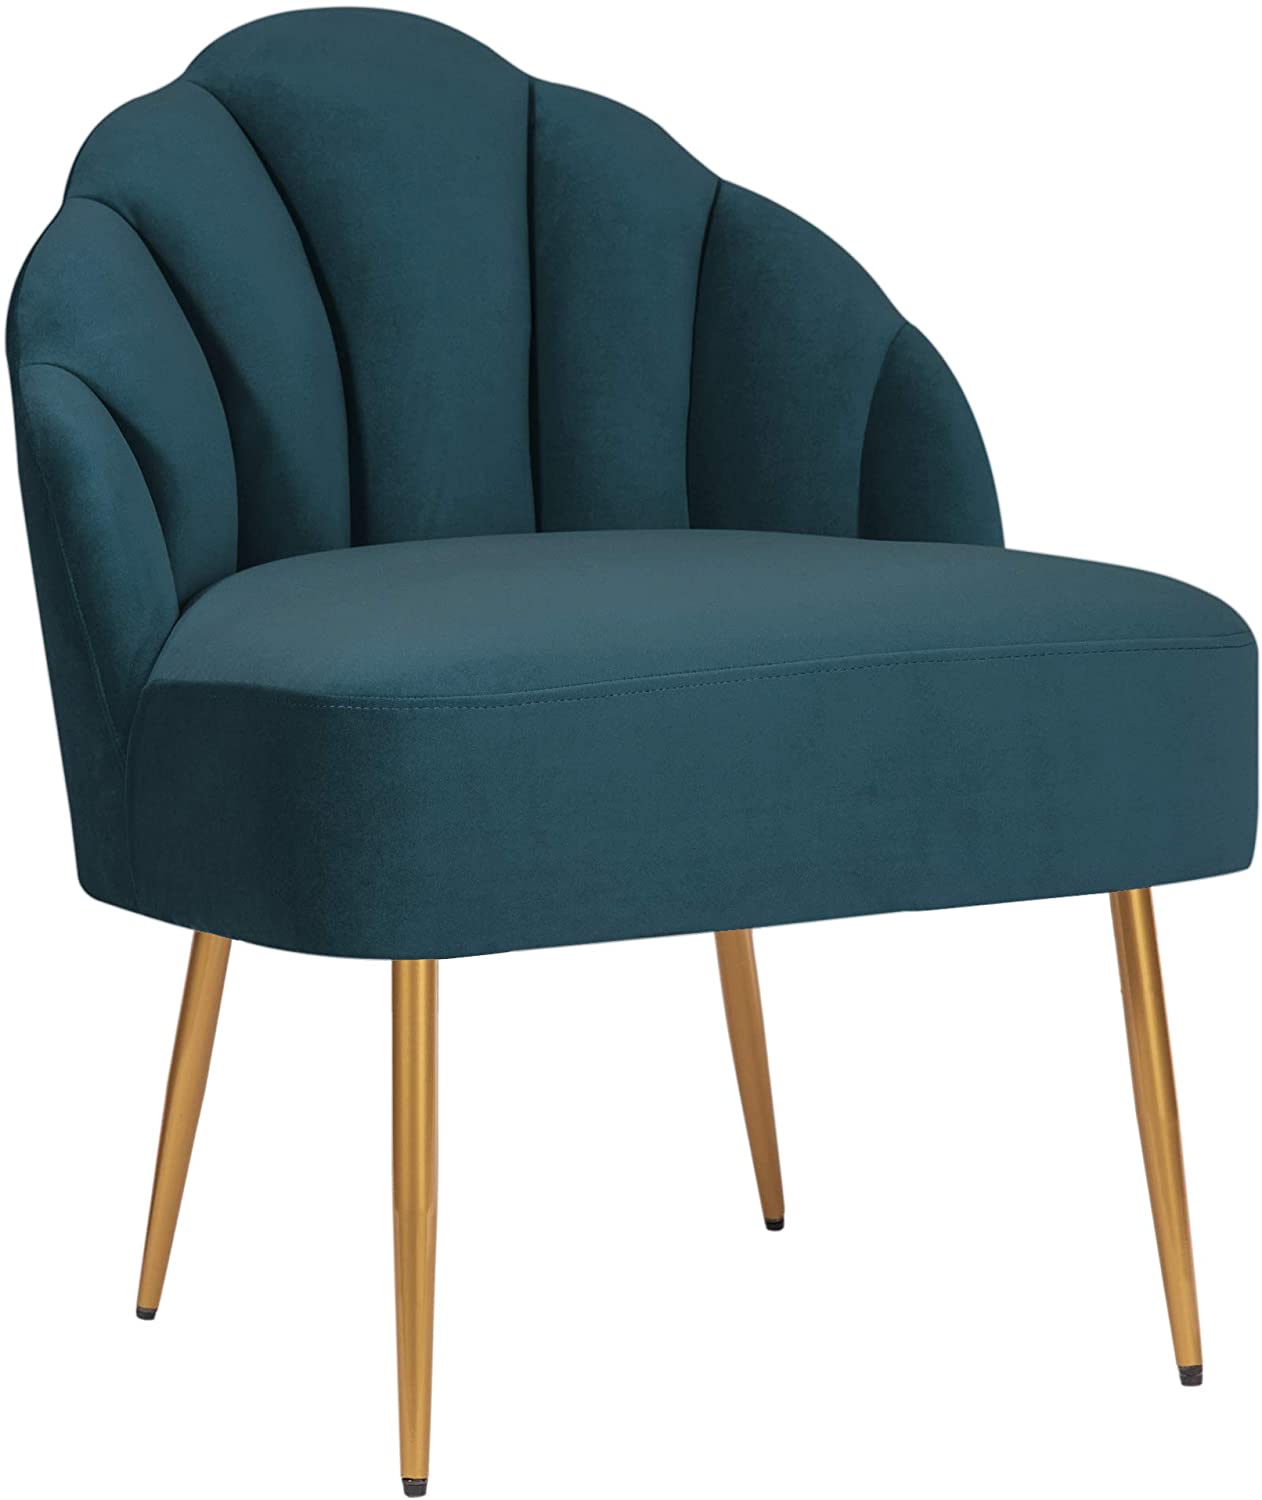 Sofa Chair: Rose, Teal Sofa Set